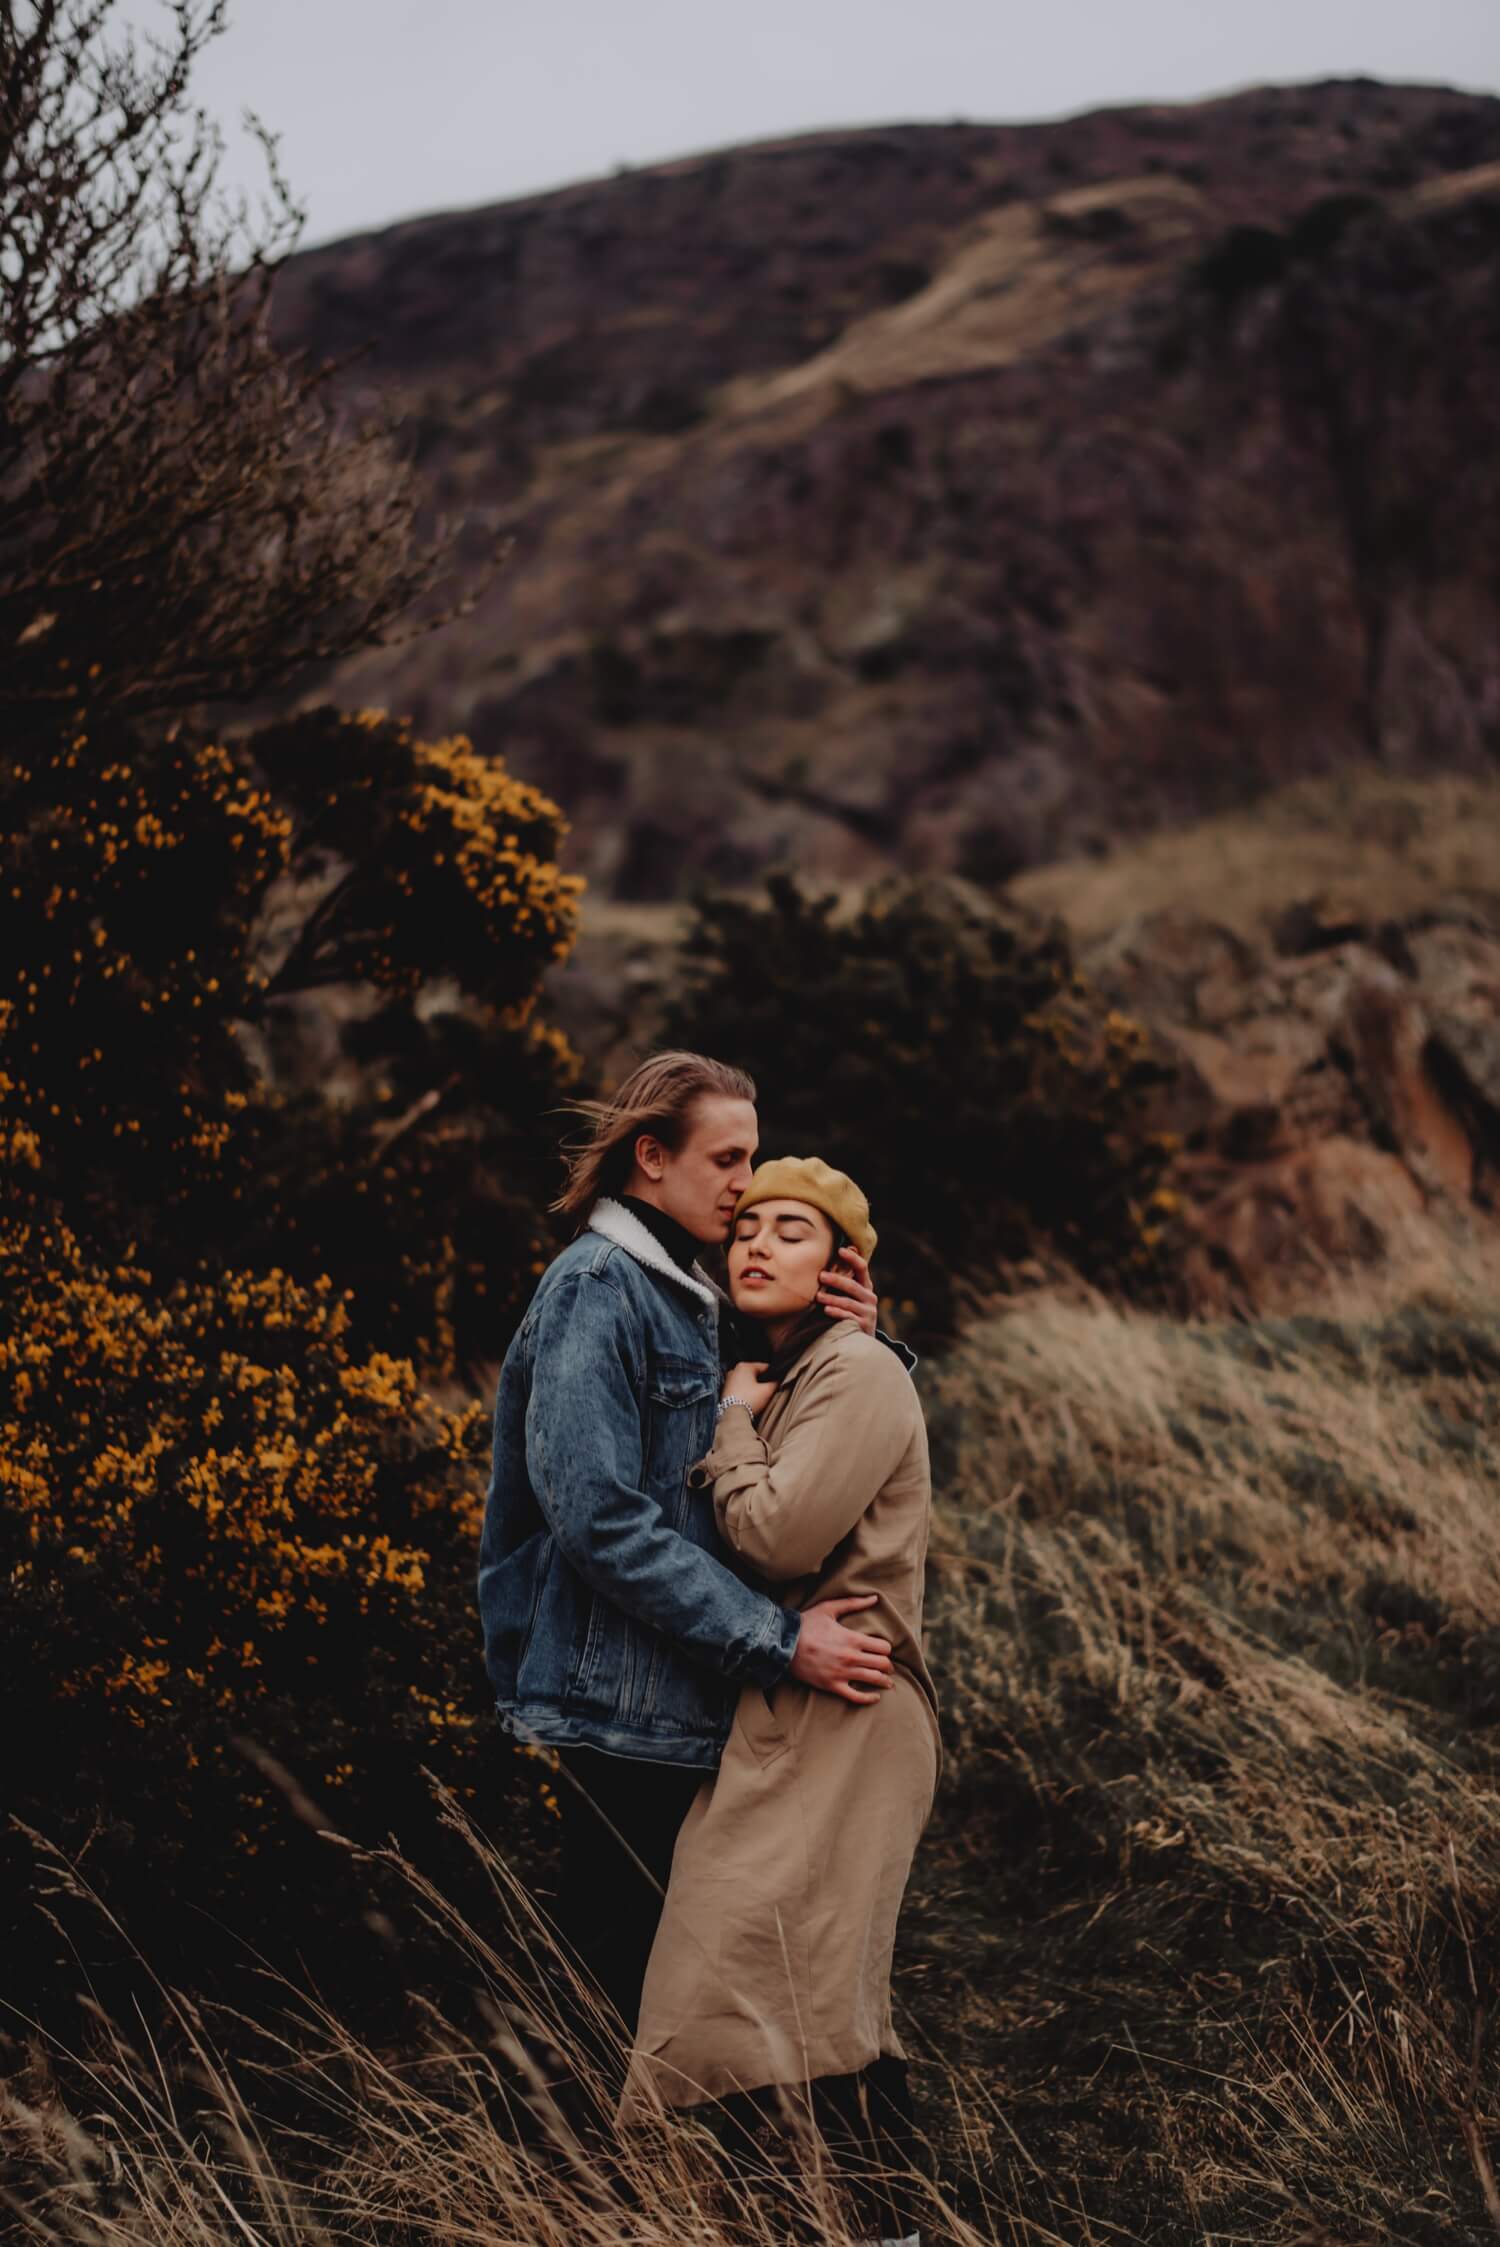 Scotland Couple Photoshoot - Destination wedding photographer - The Adamkovi, scotland highlands